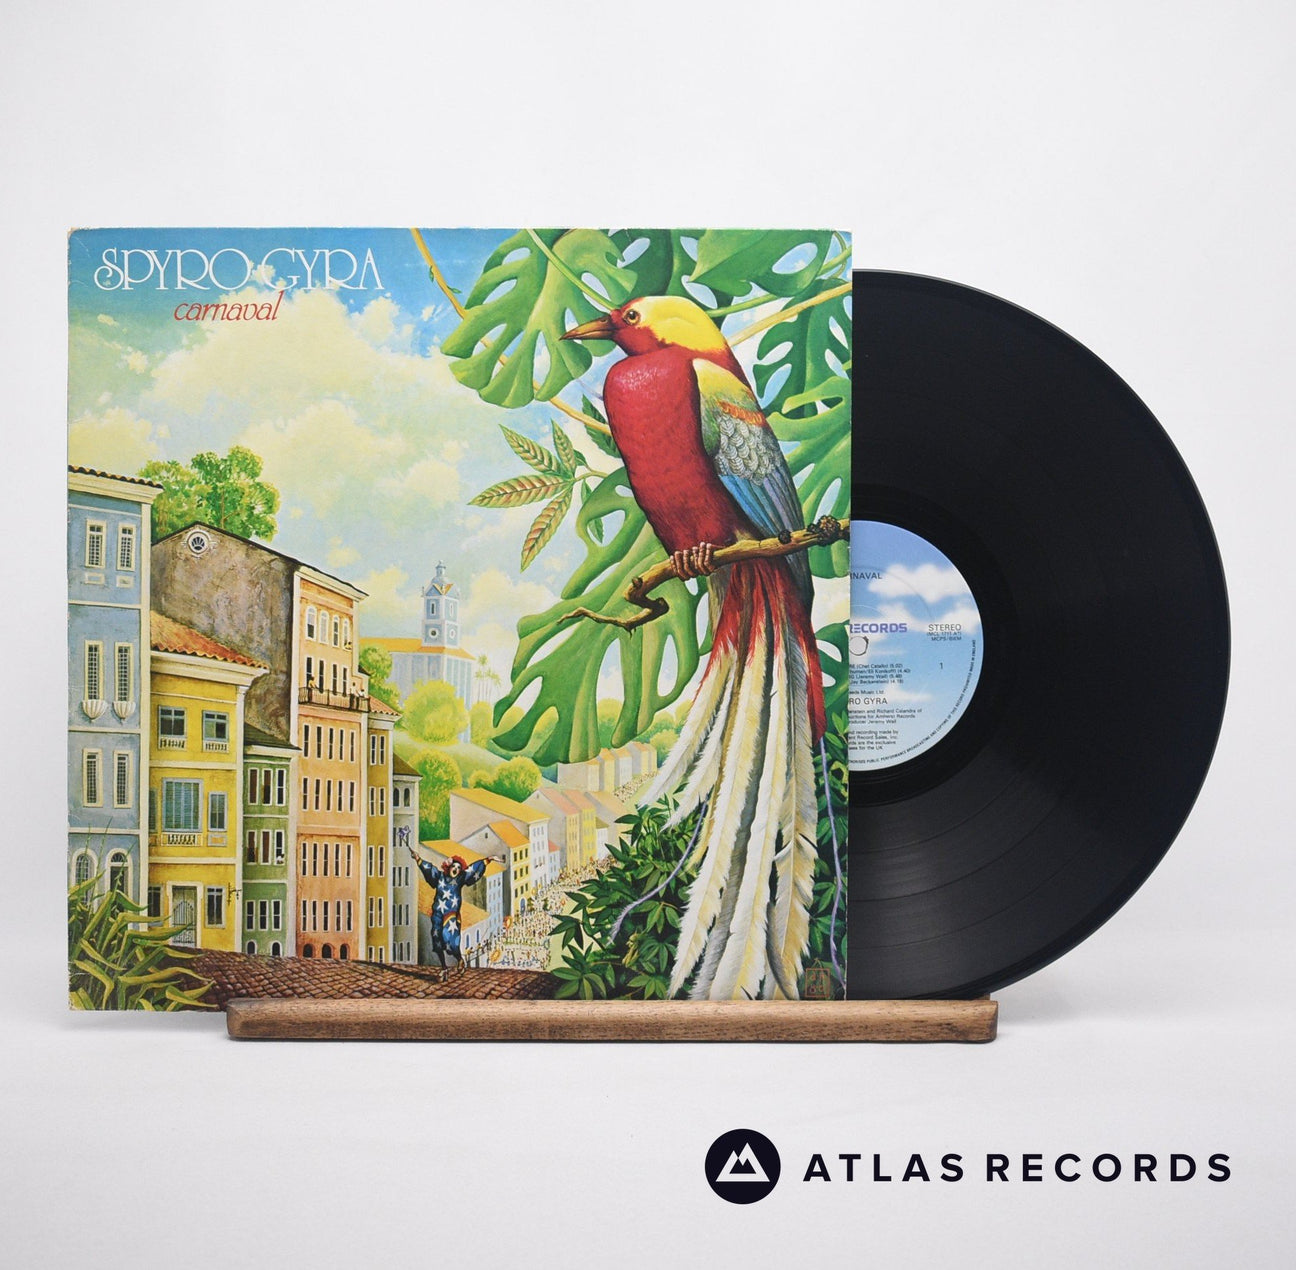 Spyro Gyra Carnaval LP Vinyl Record - Front Cover & Record